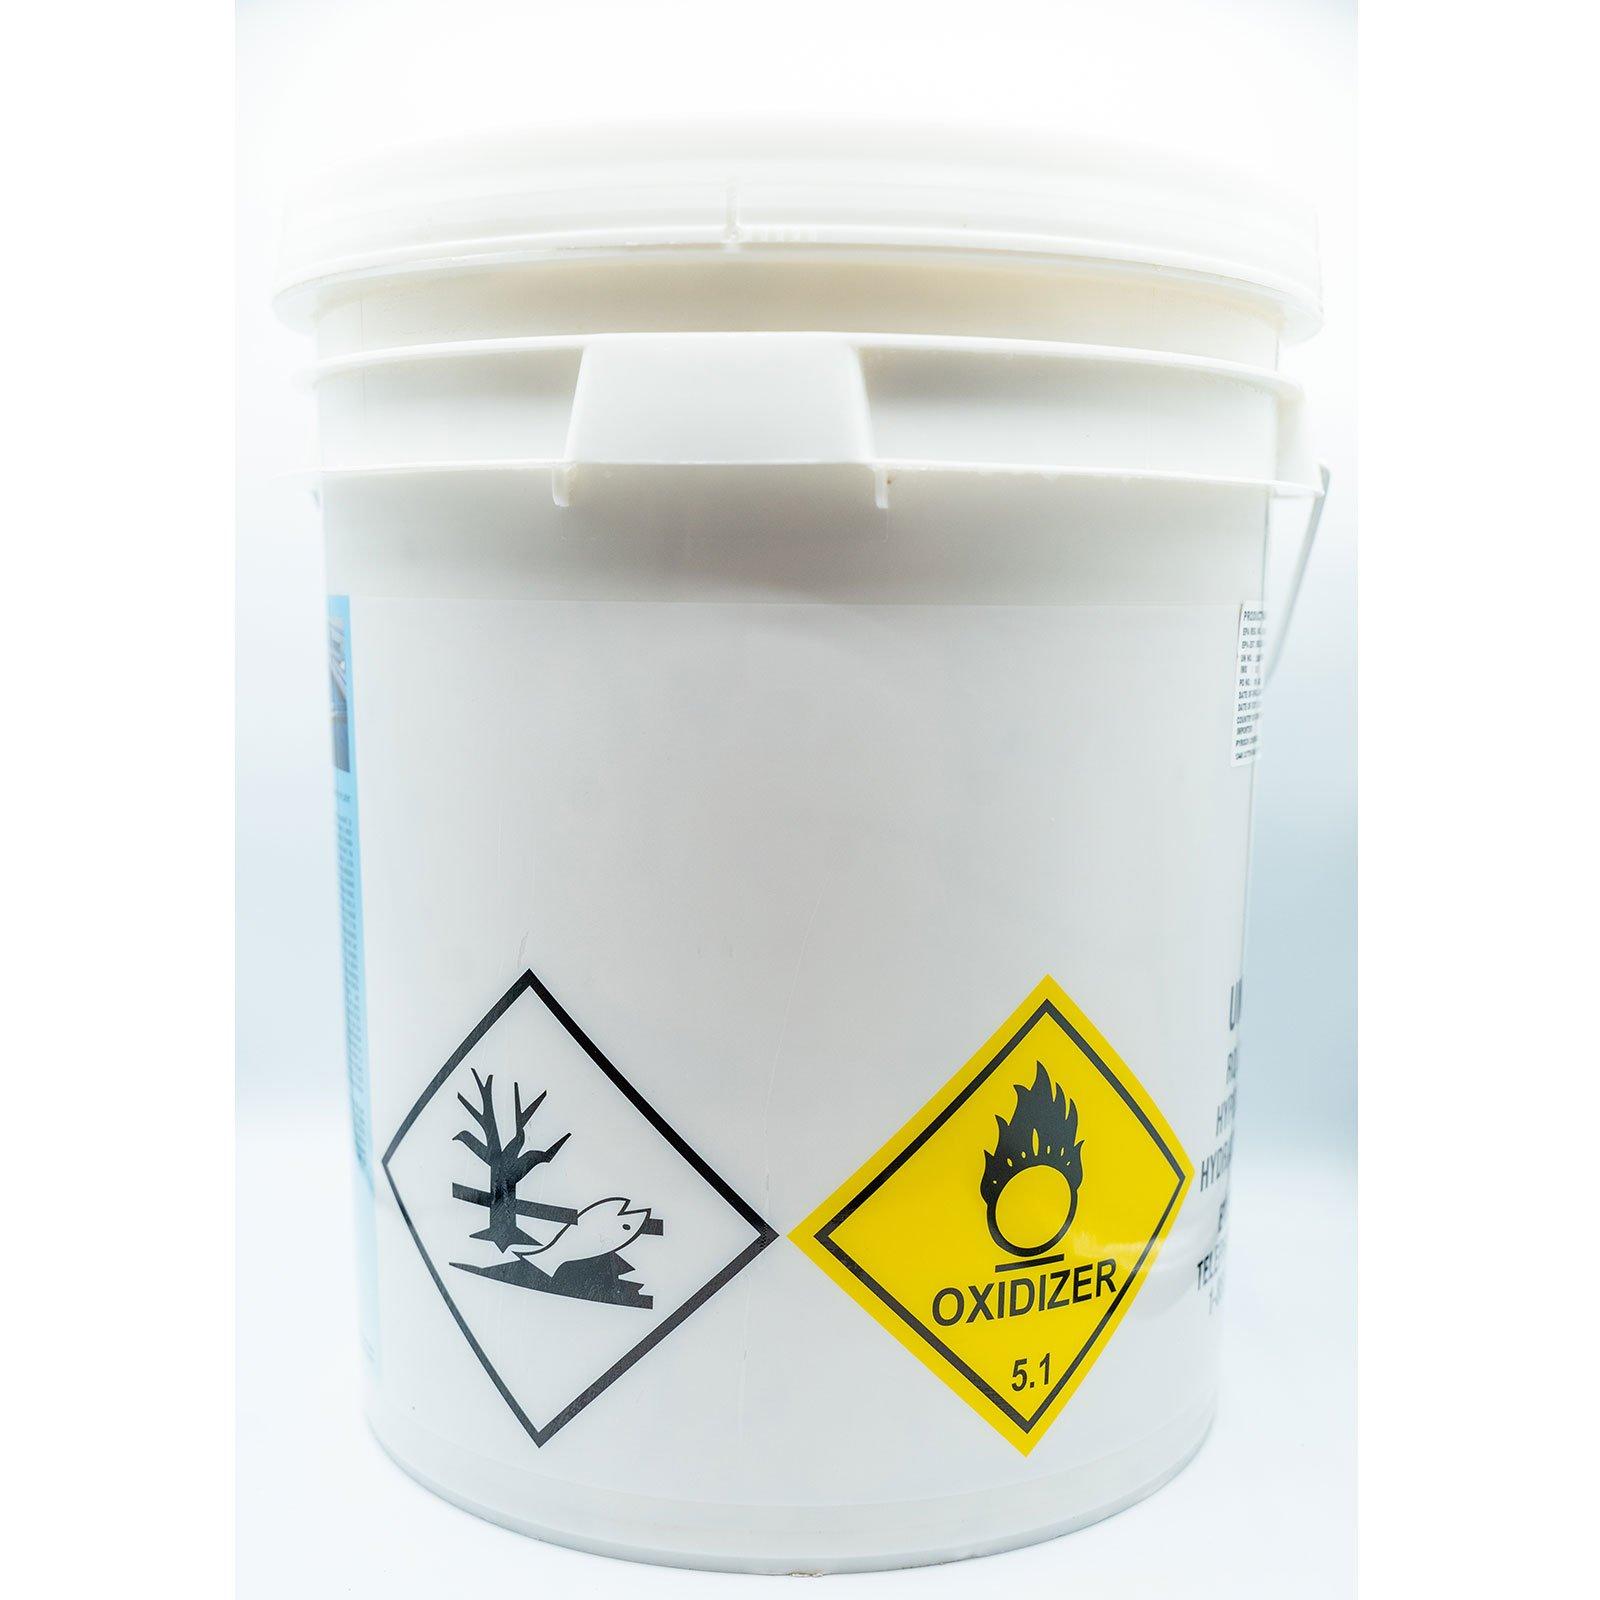 Pyrock Chemical  Aqua-Org Plus Calcium Hypochlorite Granules 55 lbs